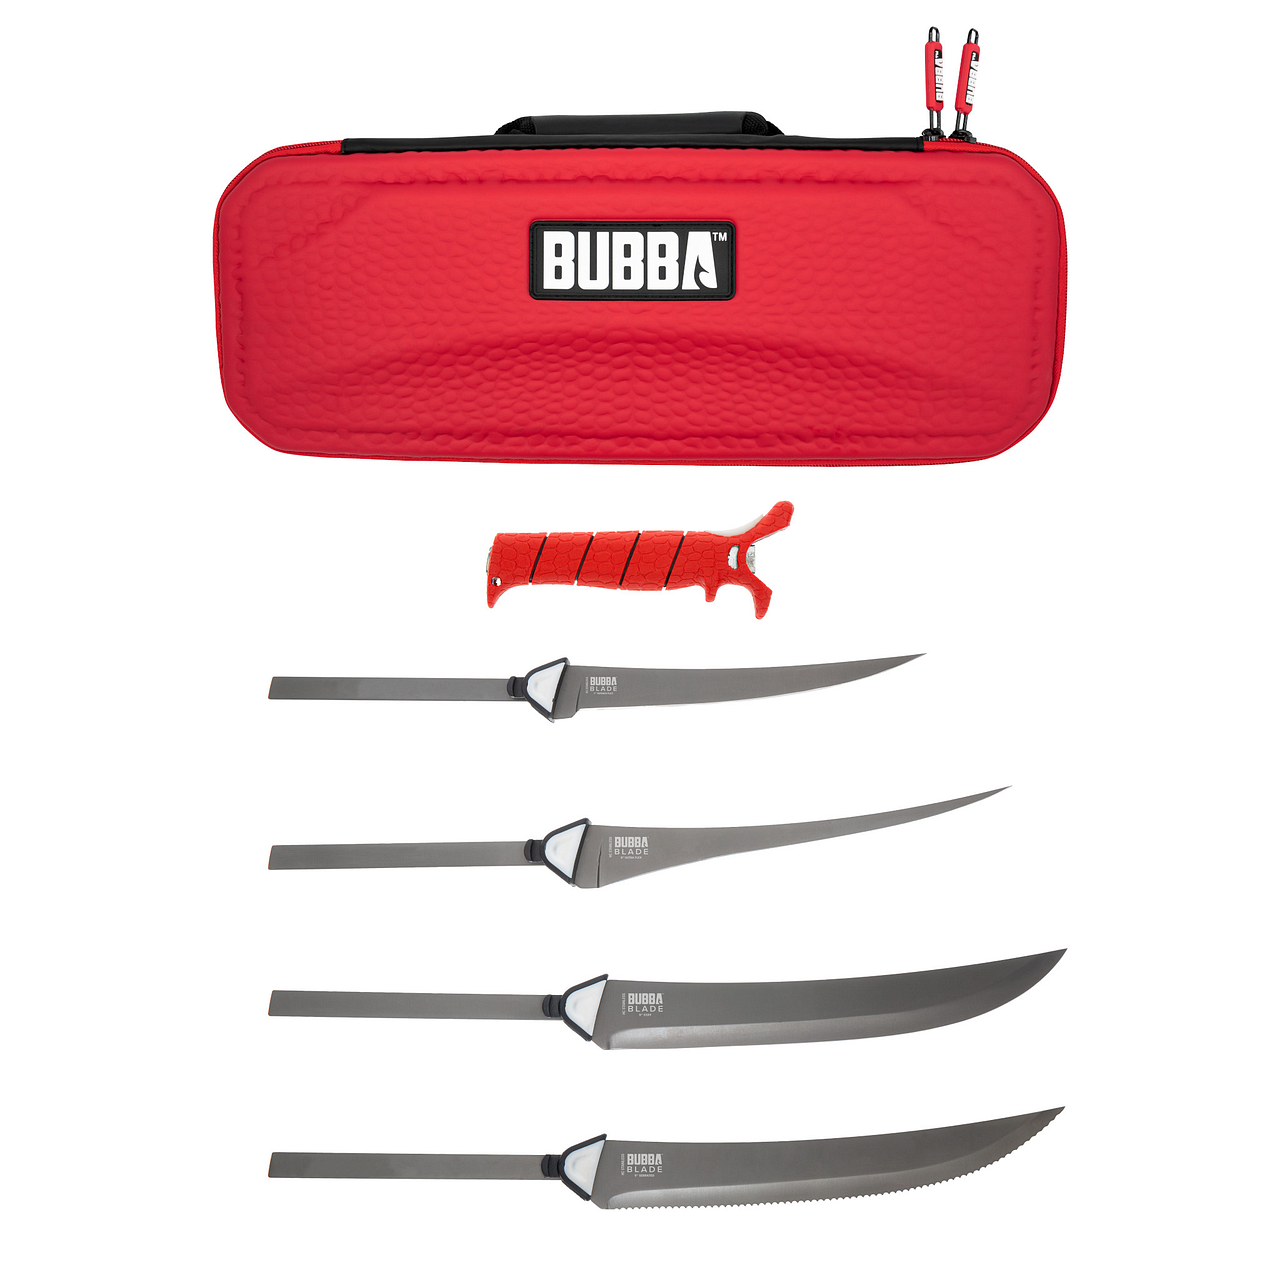 Bubba Multi-Flex Interchangeable Set (4 Blade Set)